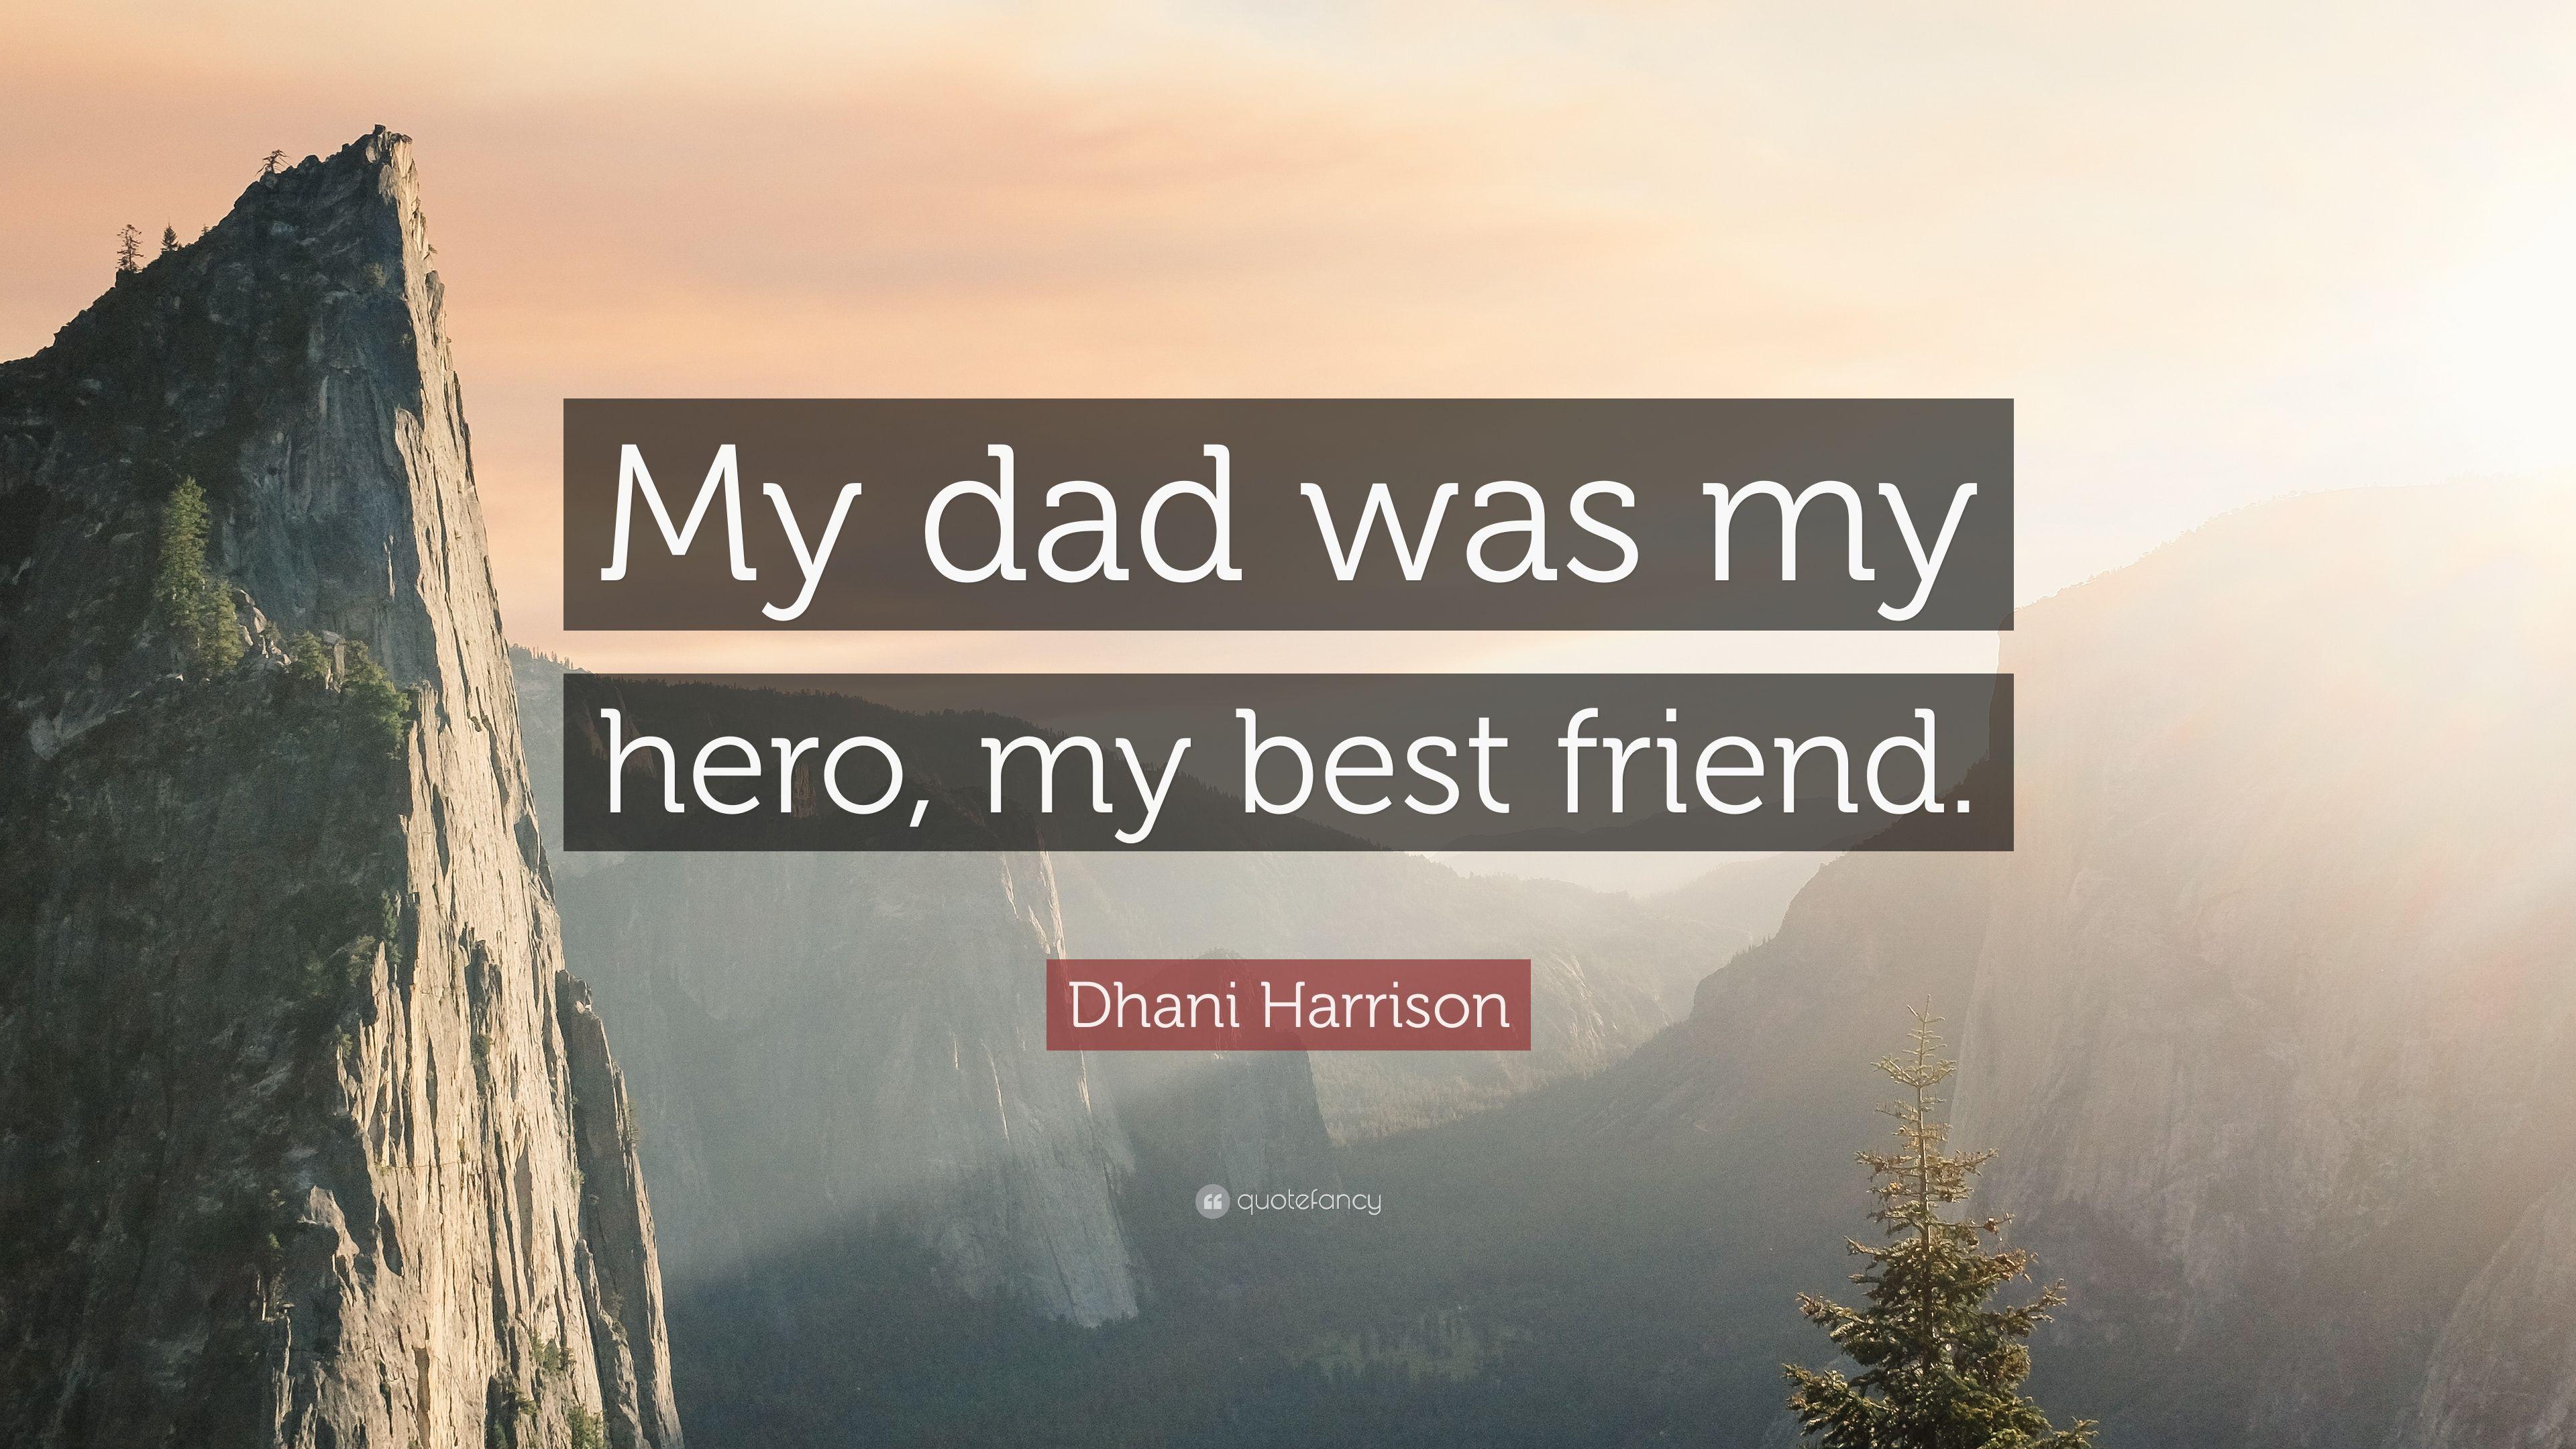 Dhani Harrison Quote: “My dad was my hero, my best friend.” 7